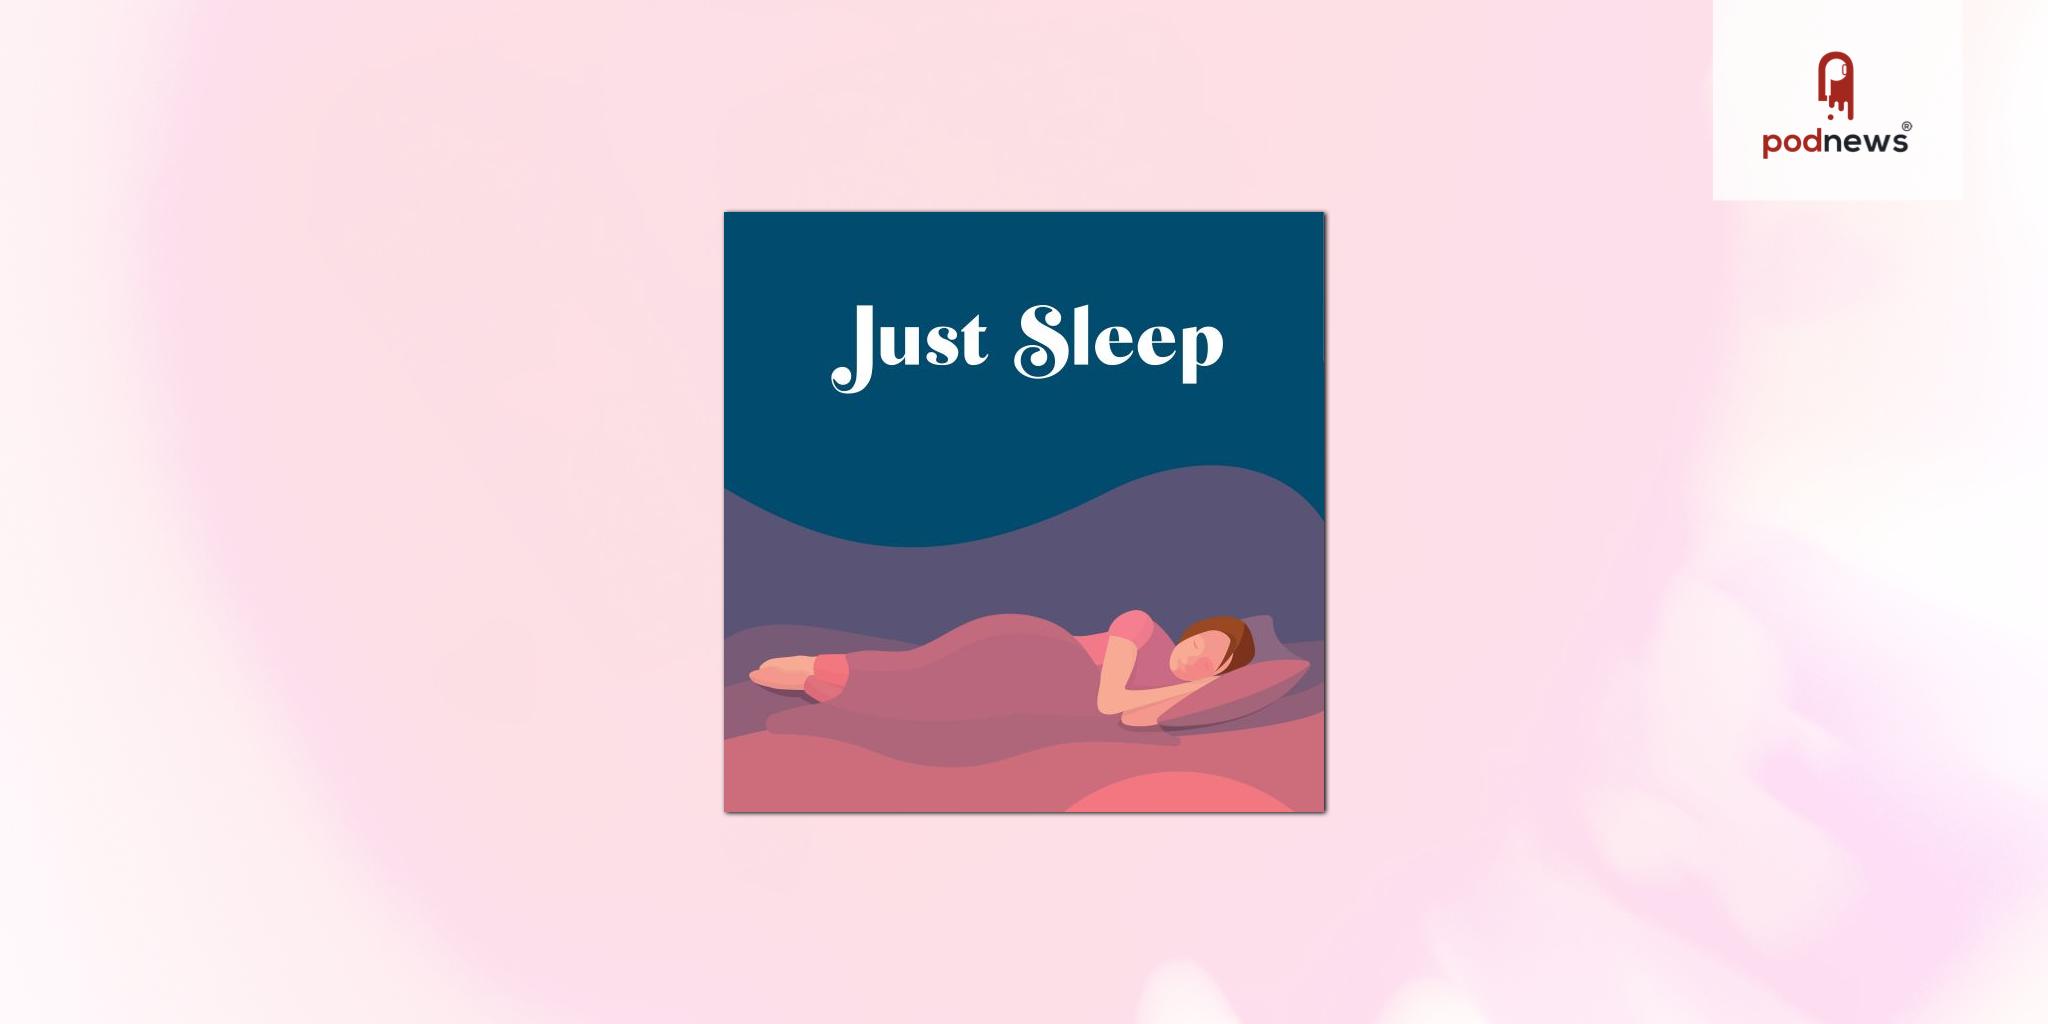 Just Sleep joins the Acast Creator Network